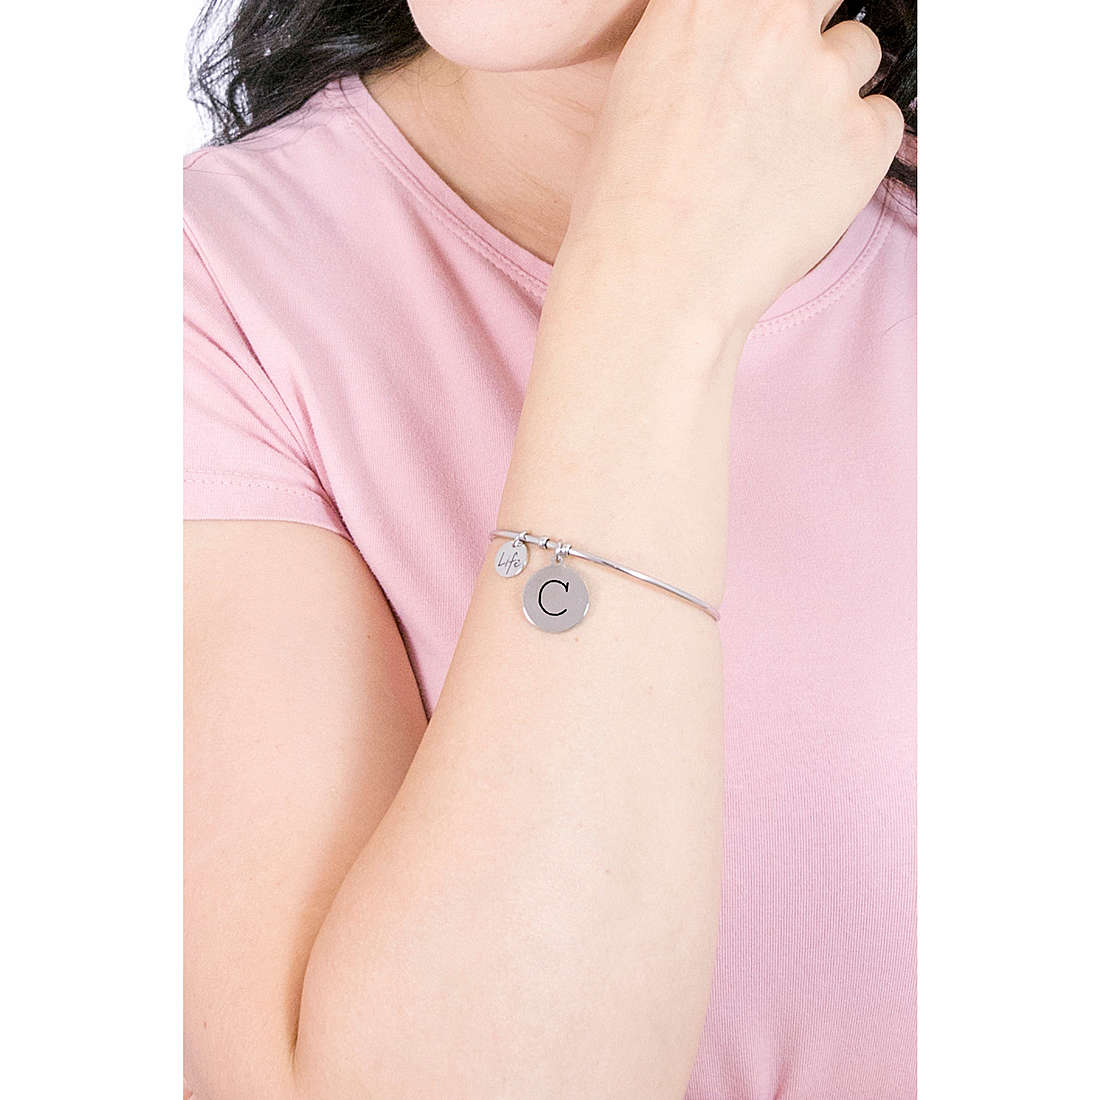 Kidult bracciali Symbols donna 231555c indosso